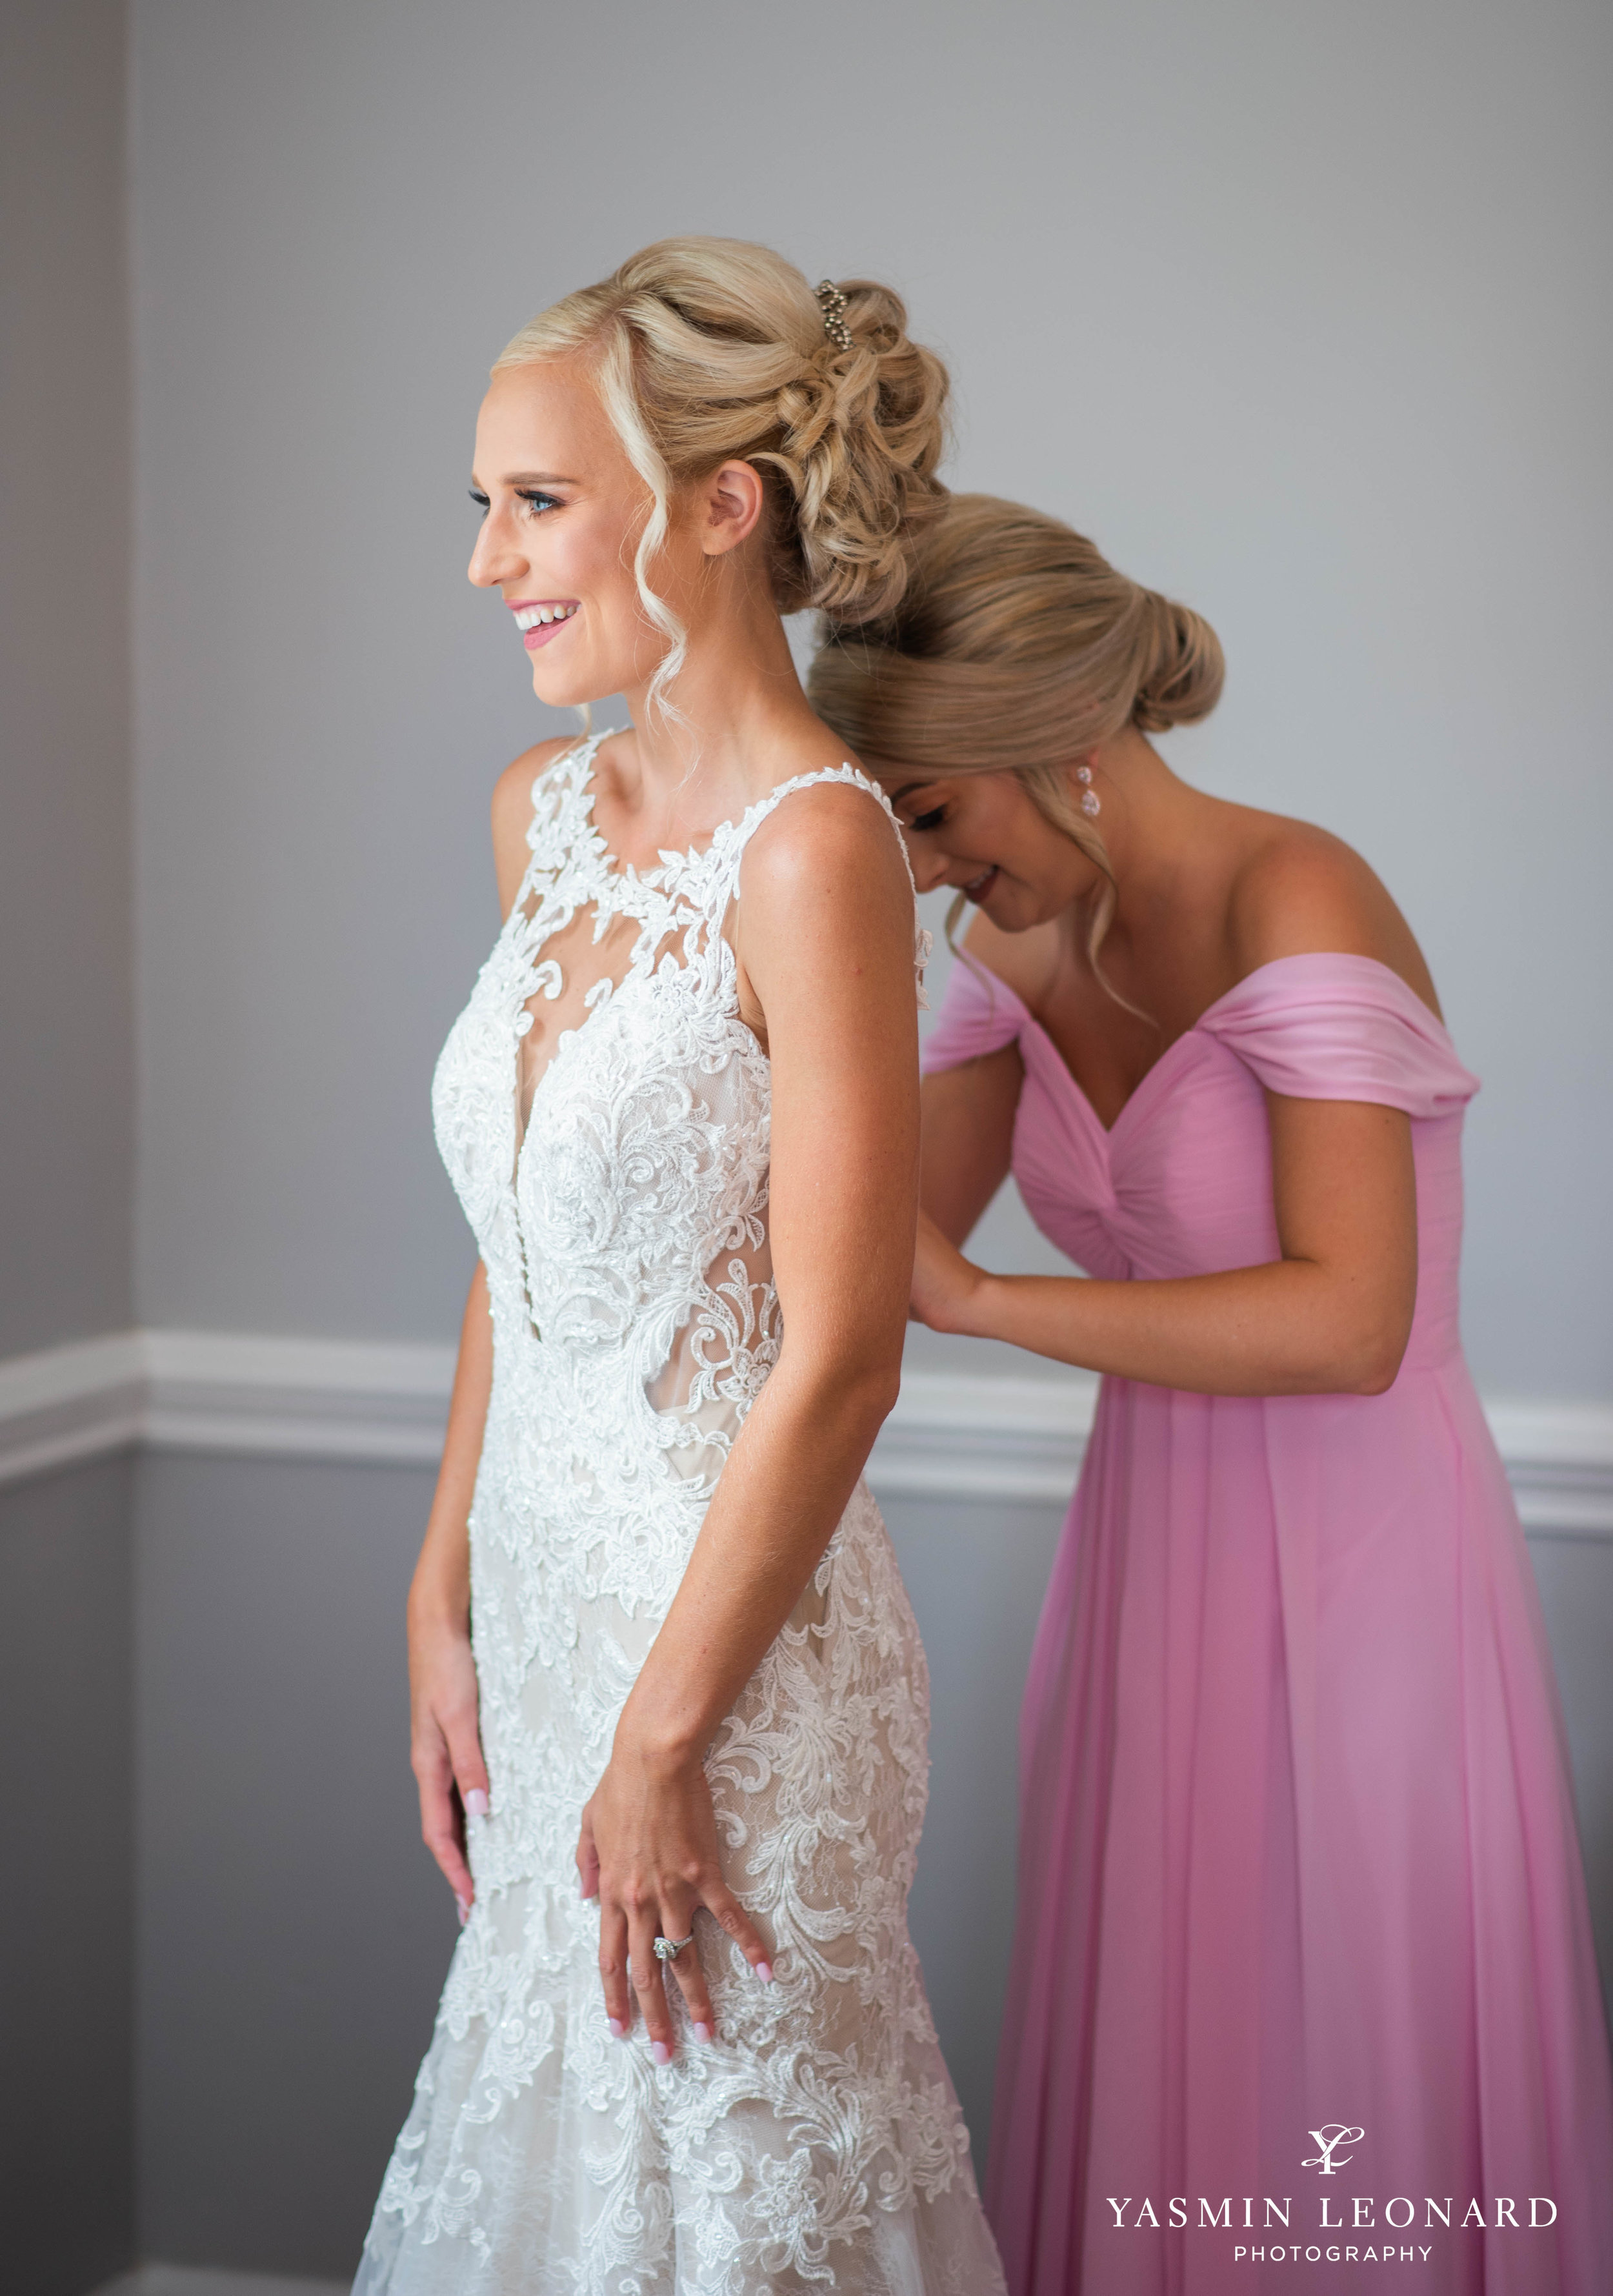 Separk Mansion - NC Weddings - Gastonia Wedding - NC Wedding Venues - Pink and Blue Wedding Ideas - Pink Bridesmaid Dresses - Yasmin Leonard Photography-8.jpg